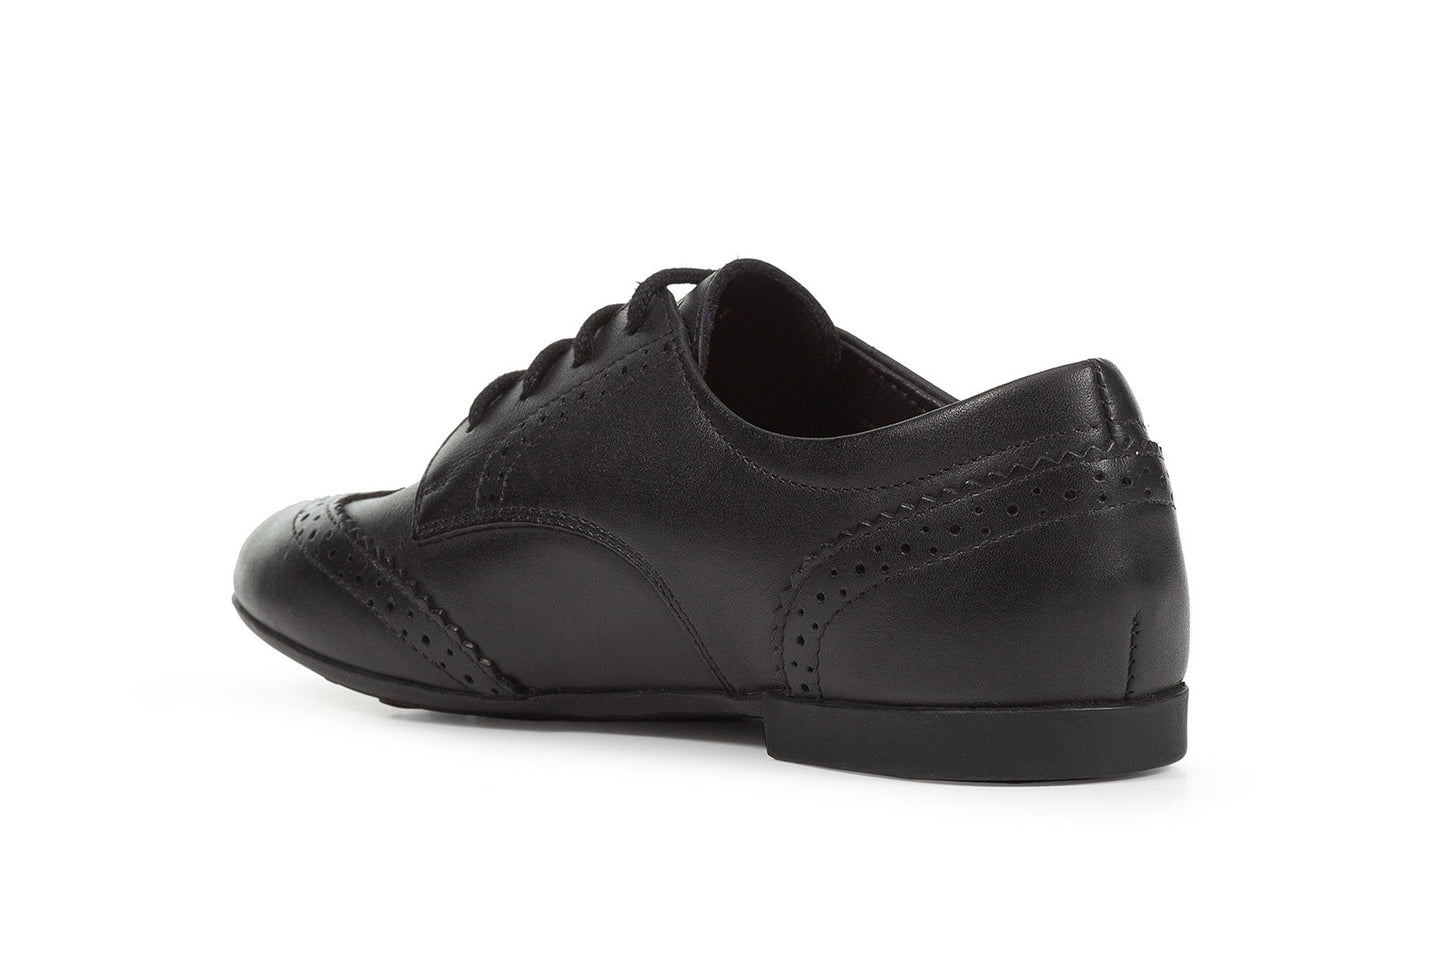 Plie Black Leather Lace-up Brogue Girl's School Shoe